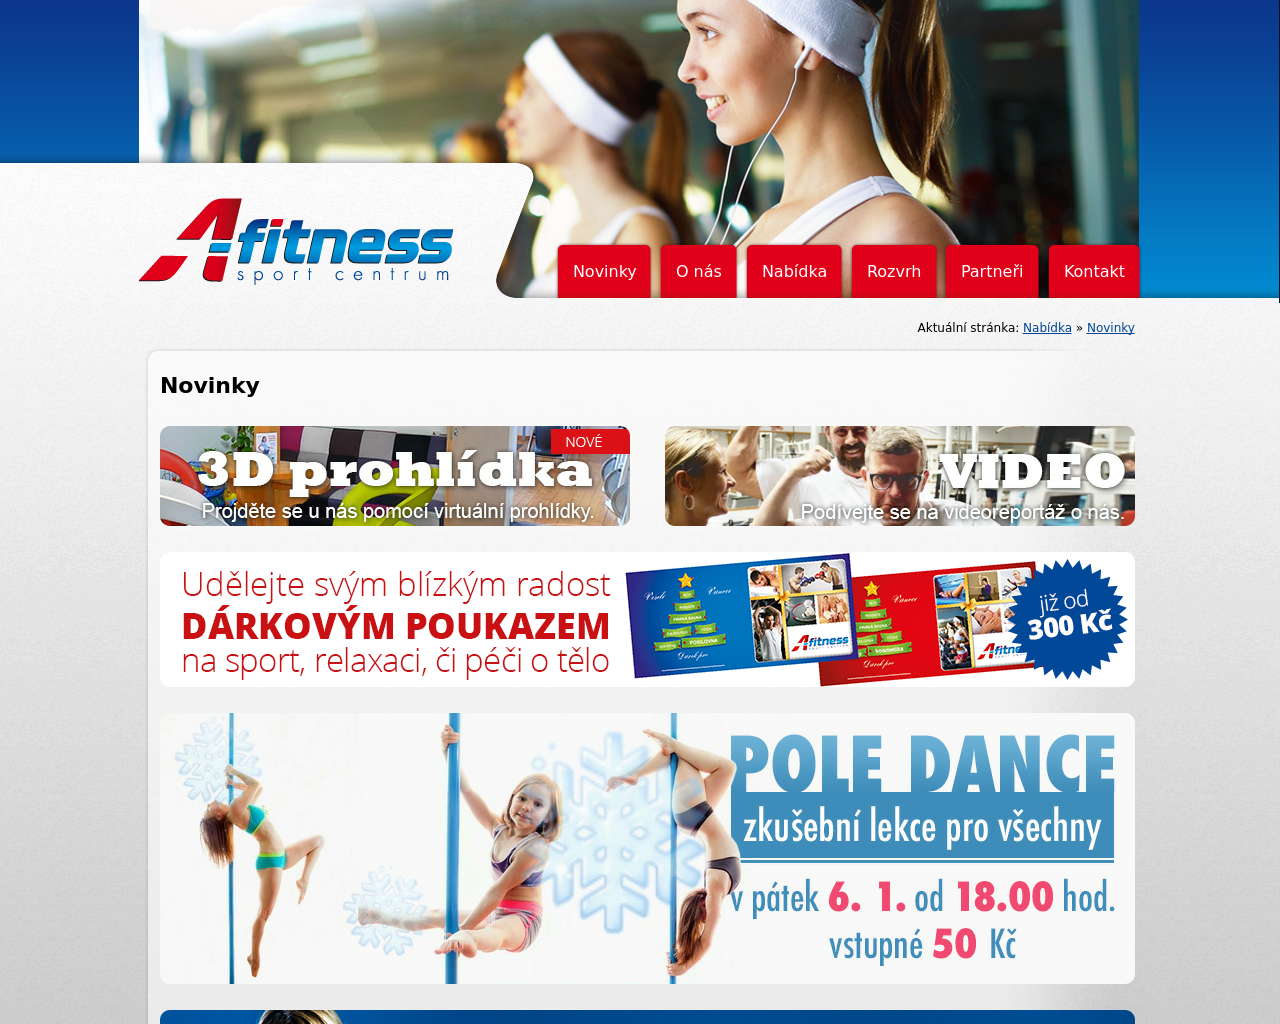 Site Image a-fitness.cz v 1280x1024